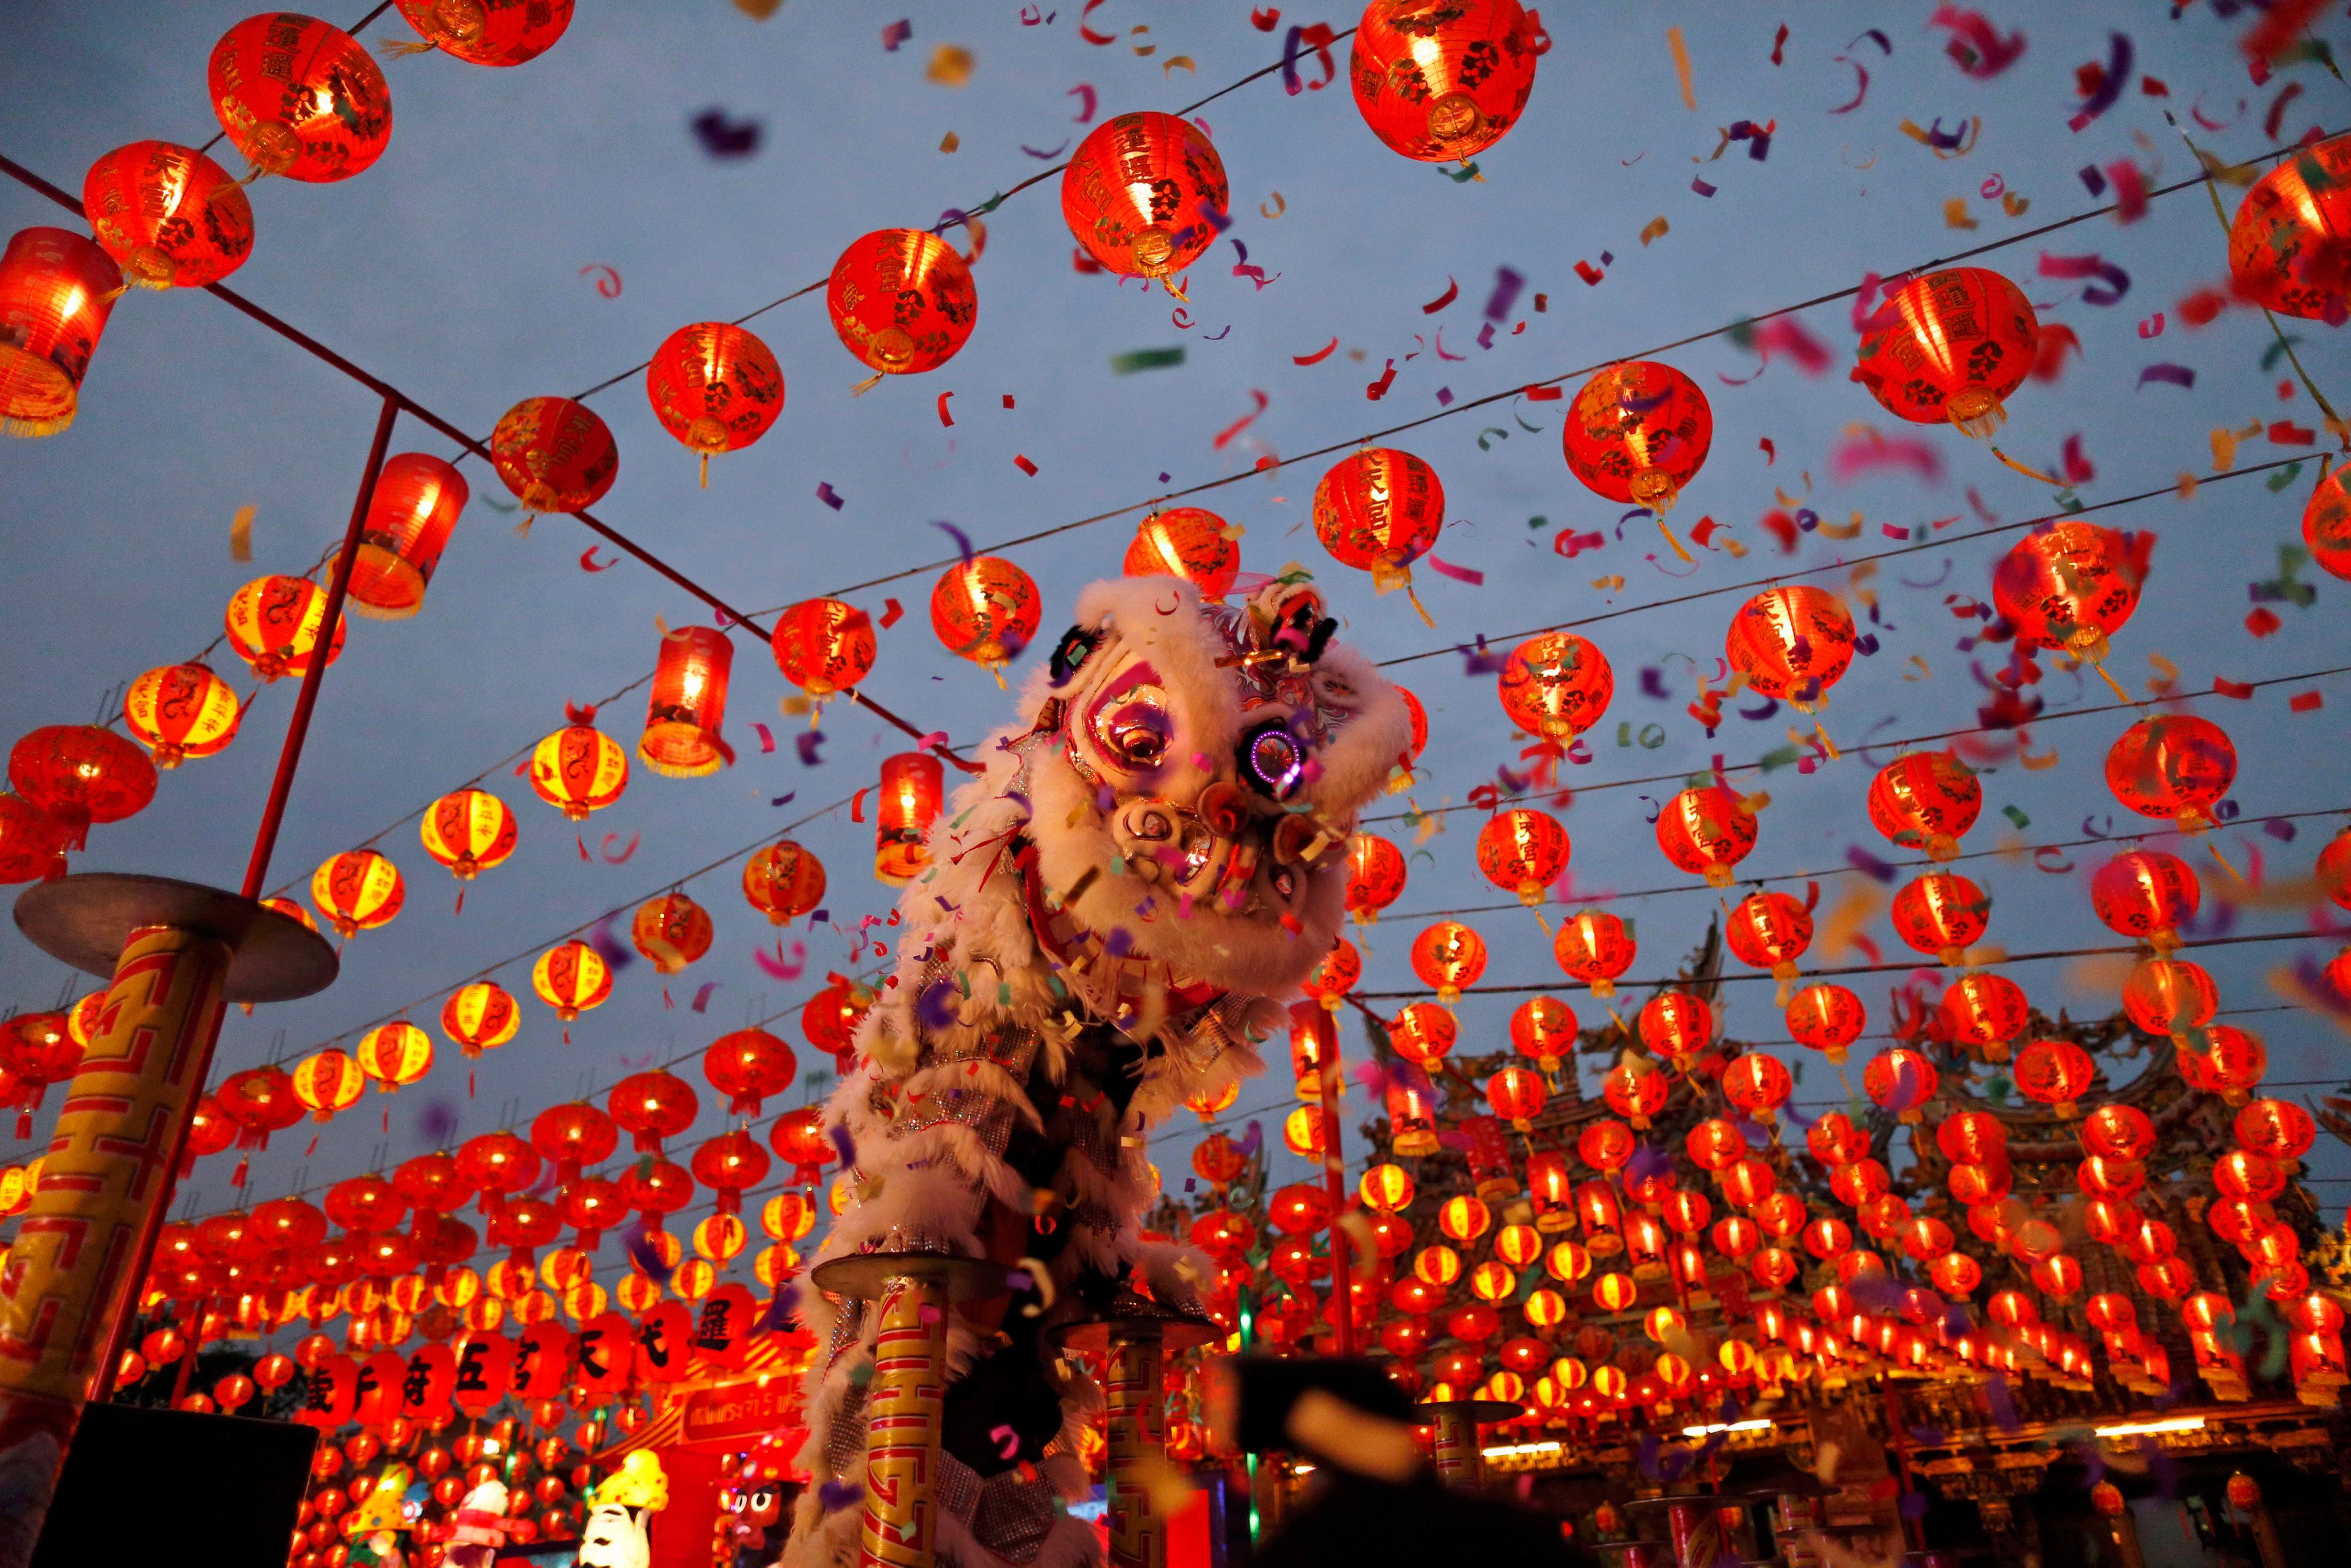 New years festival. Китайский новый год (Chinese New year). Новый год в Китае. Китайский новый год празднование. Новогодний фестиваль в Китае.